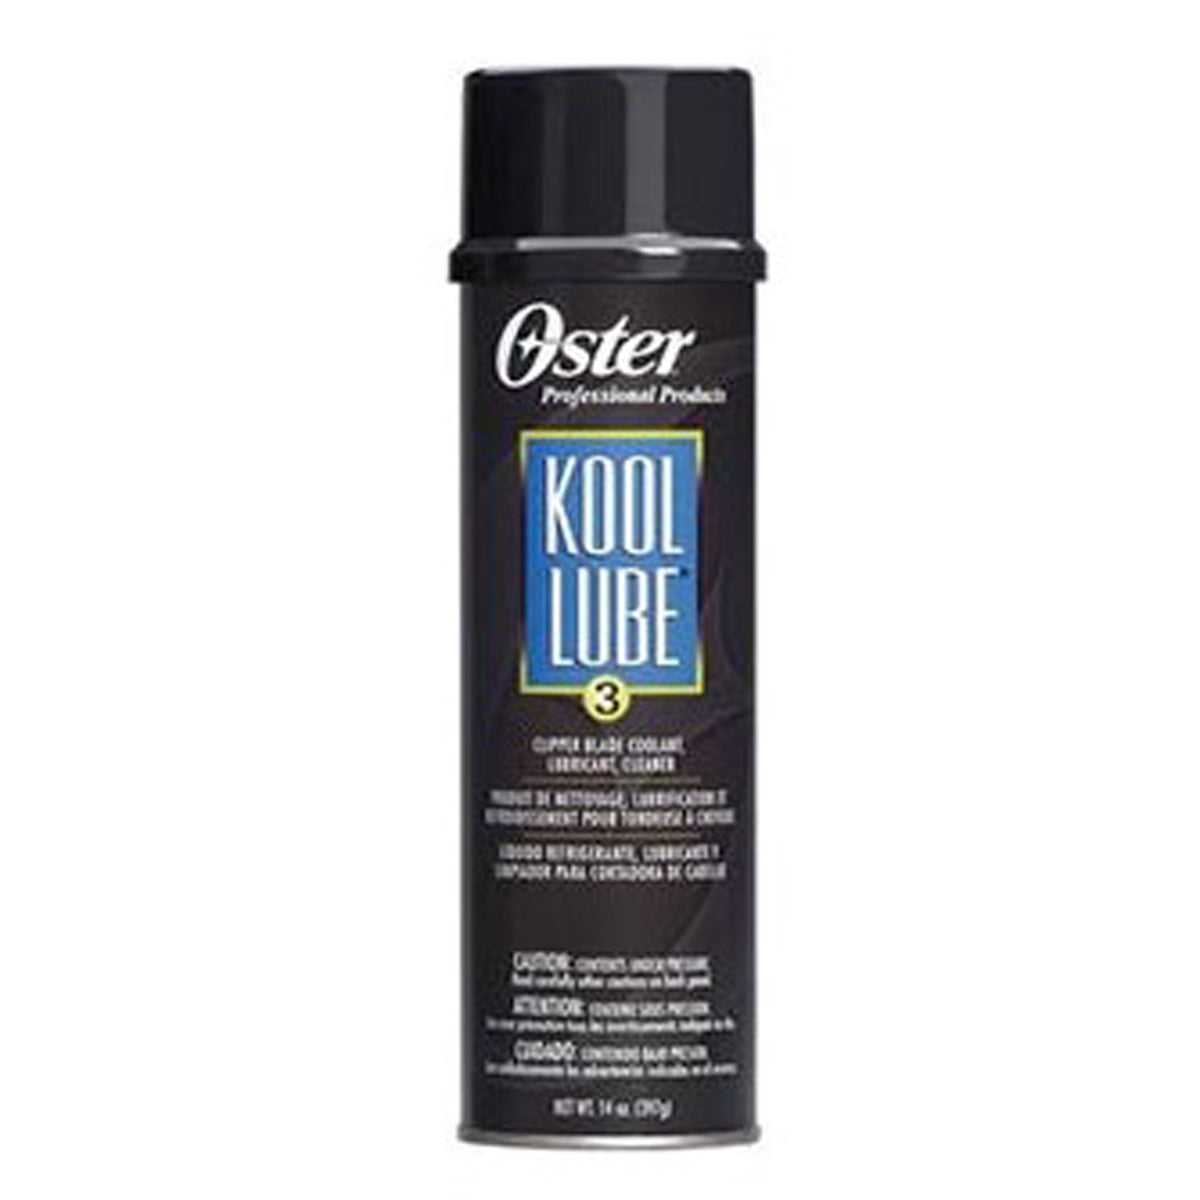 Oster Kool-Lube Spray